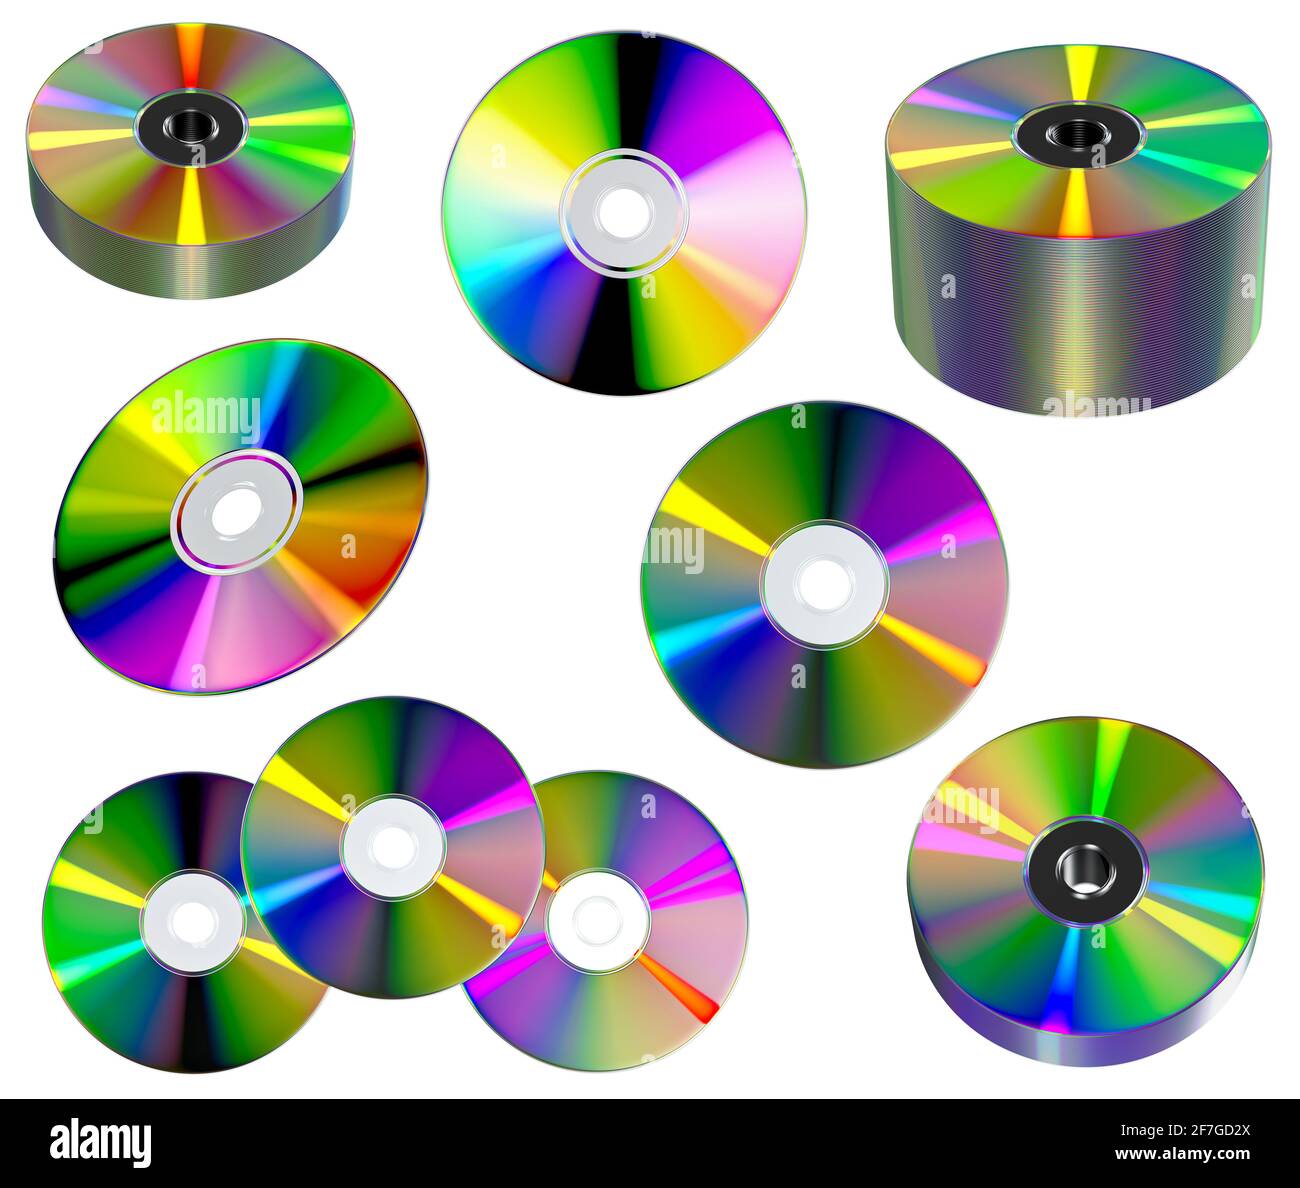 Group of CD or DVD disk on white background, 3D Illustration Stock Photo